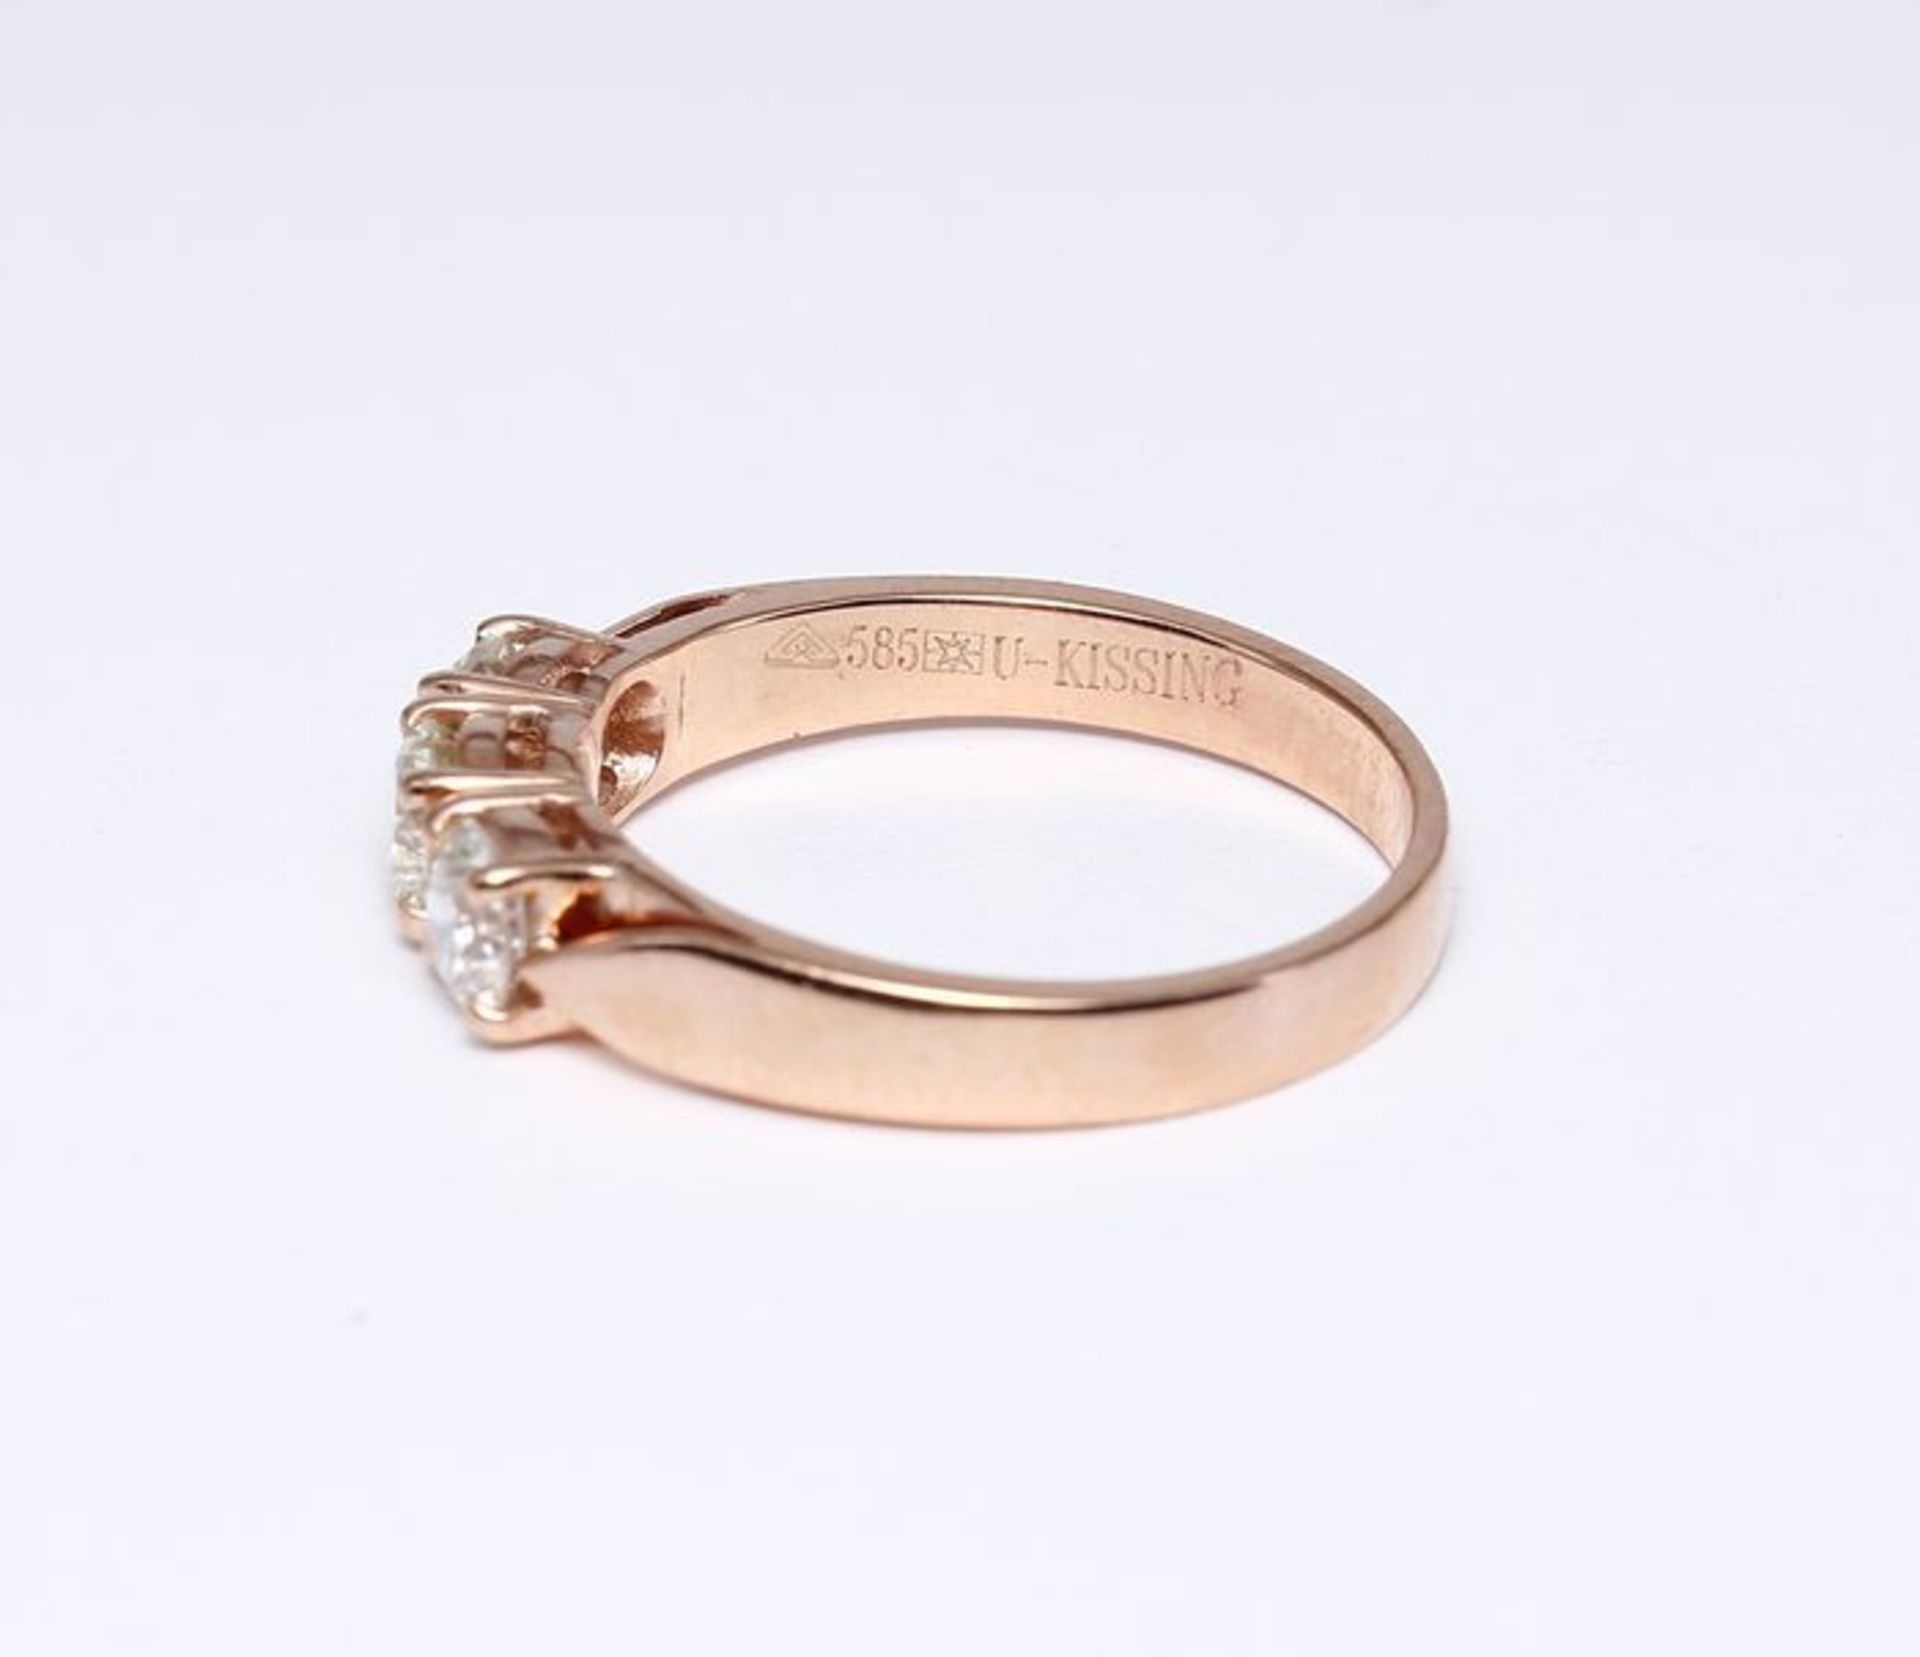 IGI Certified 14 K / 585 Rose Gold Trilogy Solitaire Diamond Ring - Image 4 of 6